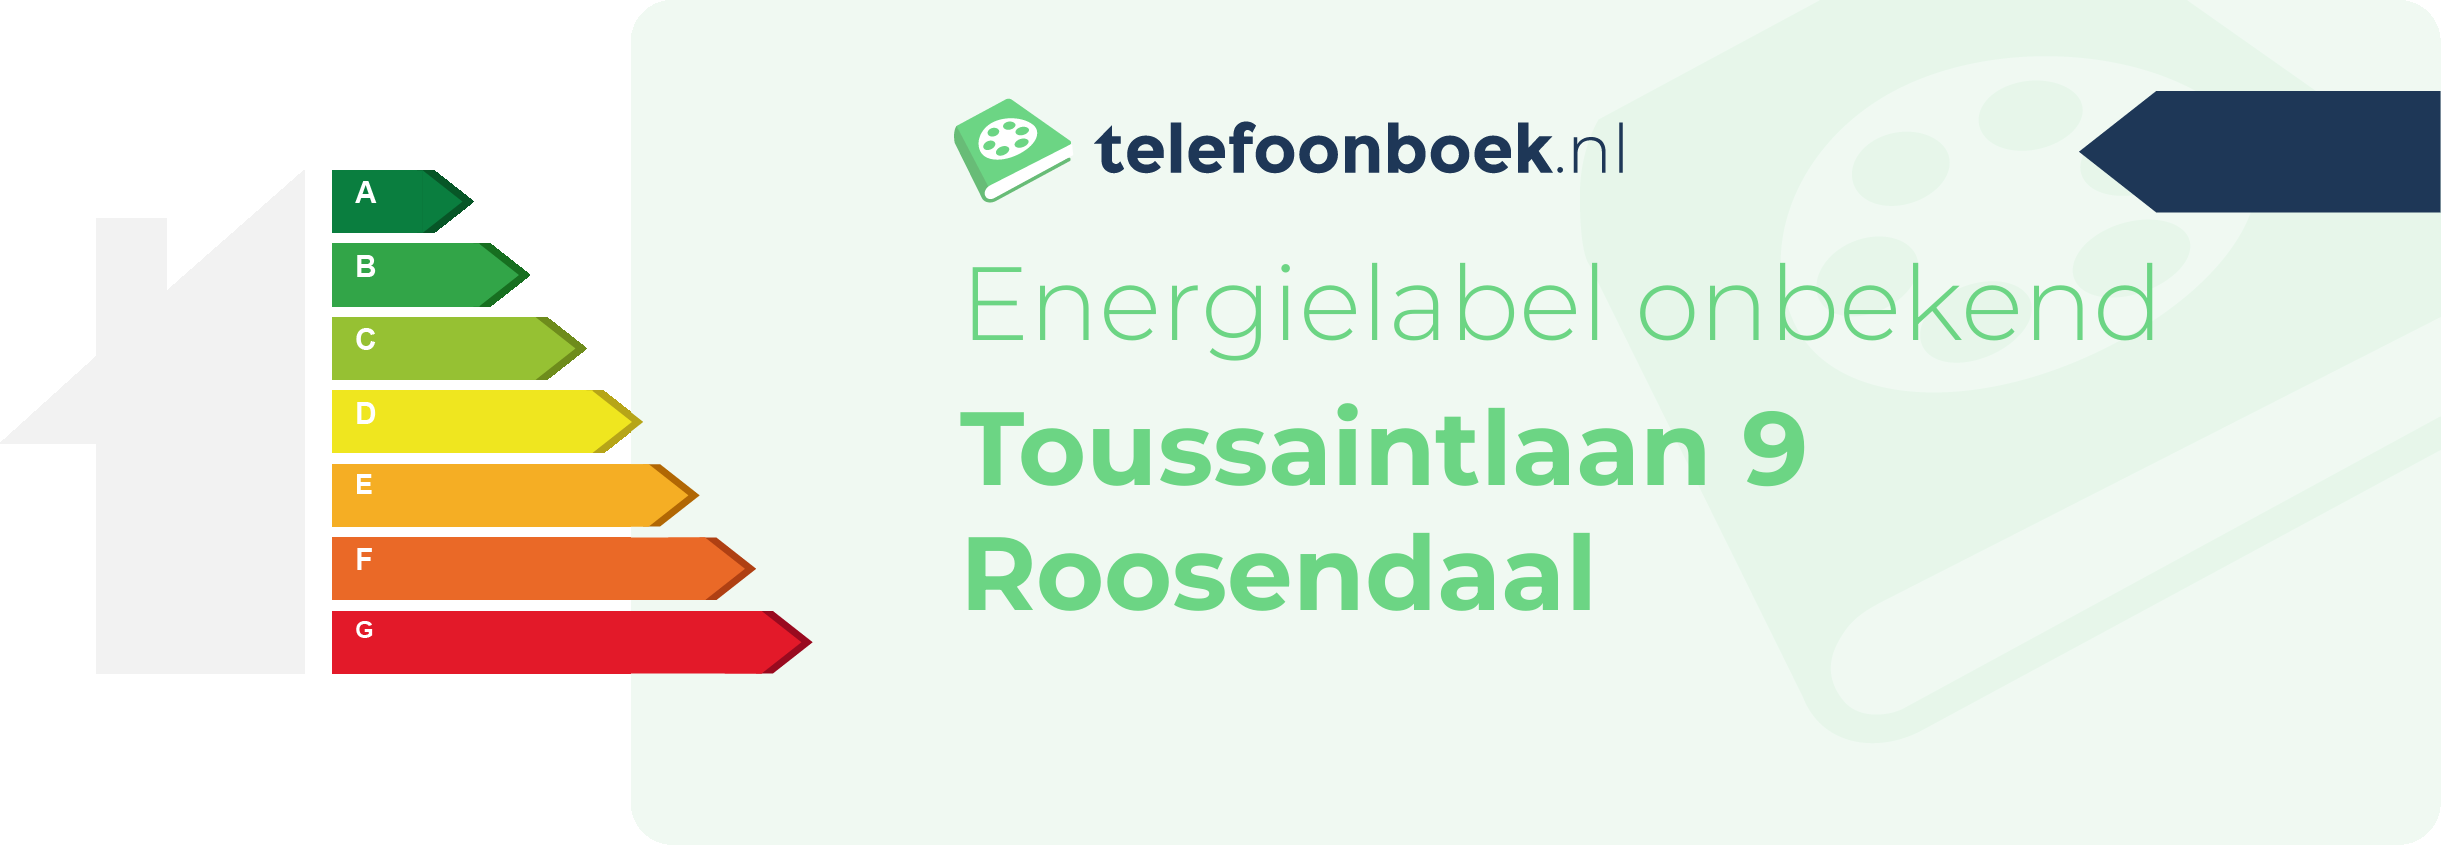 Energielabel Toussaintlaan 9 Roosendaal